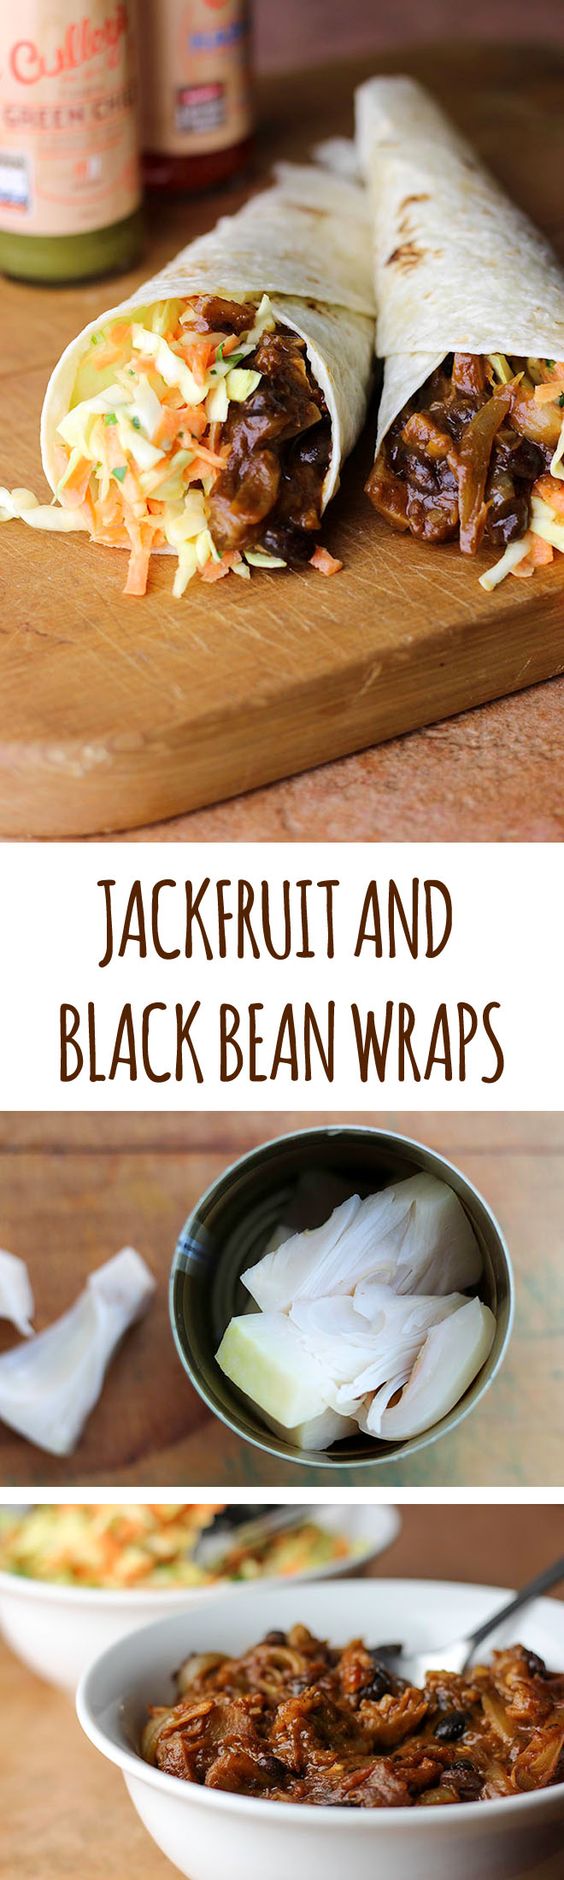 Jackfruit and black bean wraps